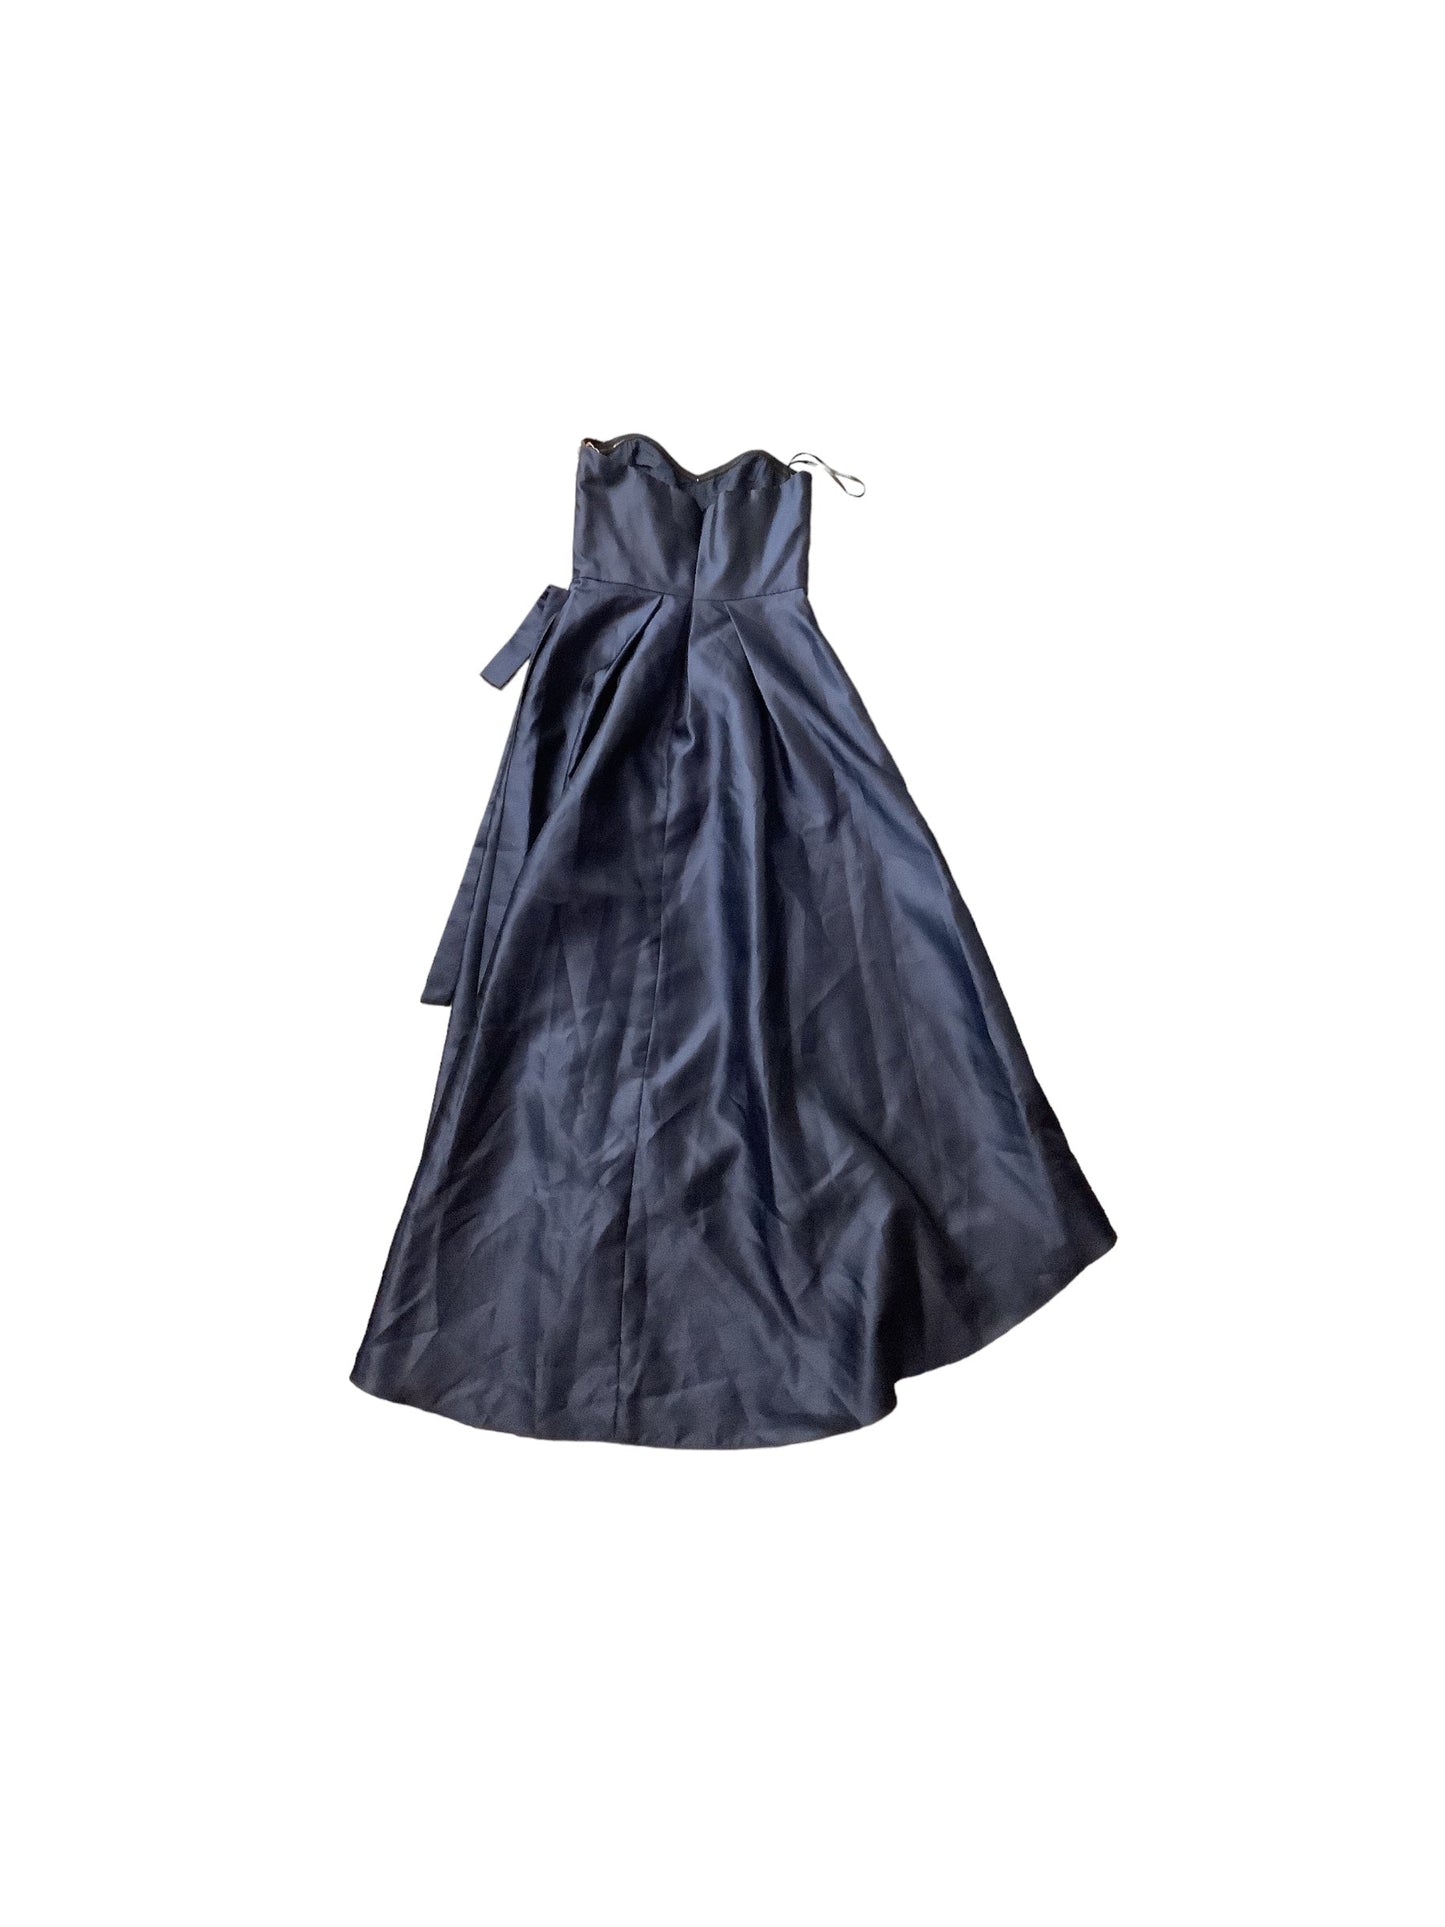 Blue Dress Party Long Clothes Mentor, Size 8